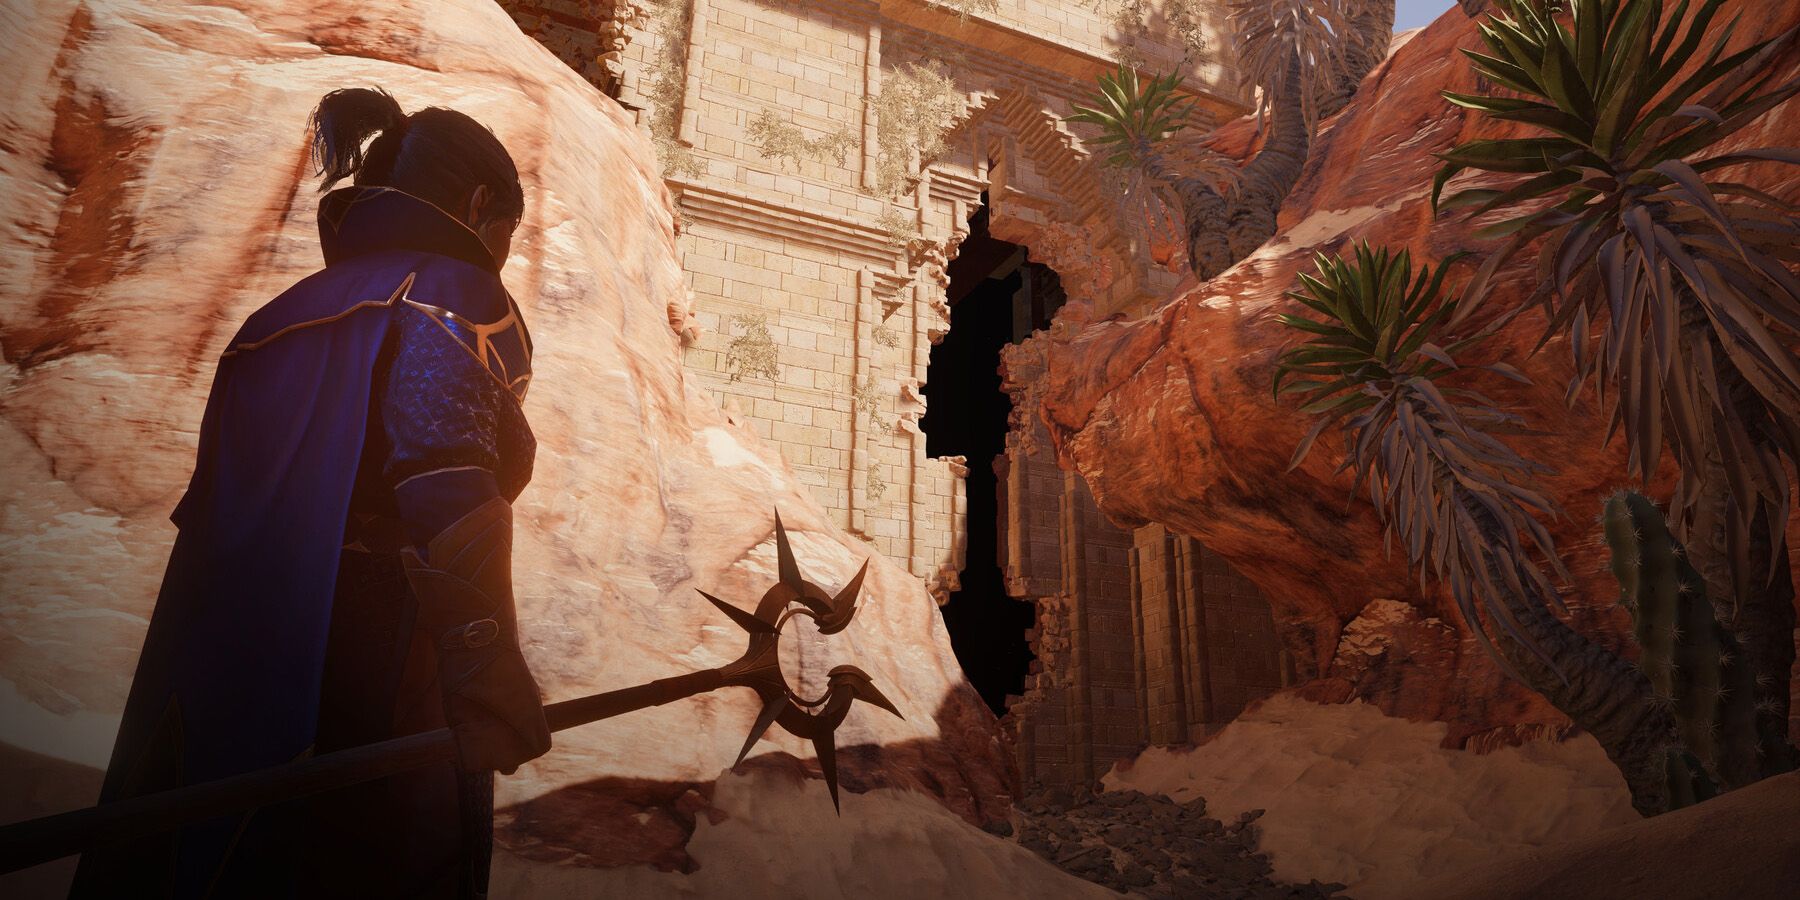 Enshrouded player standing near ruins in a desert landscape.